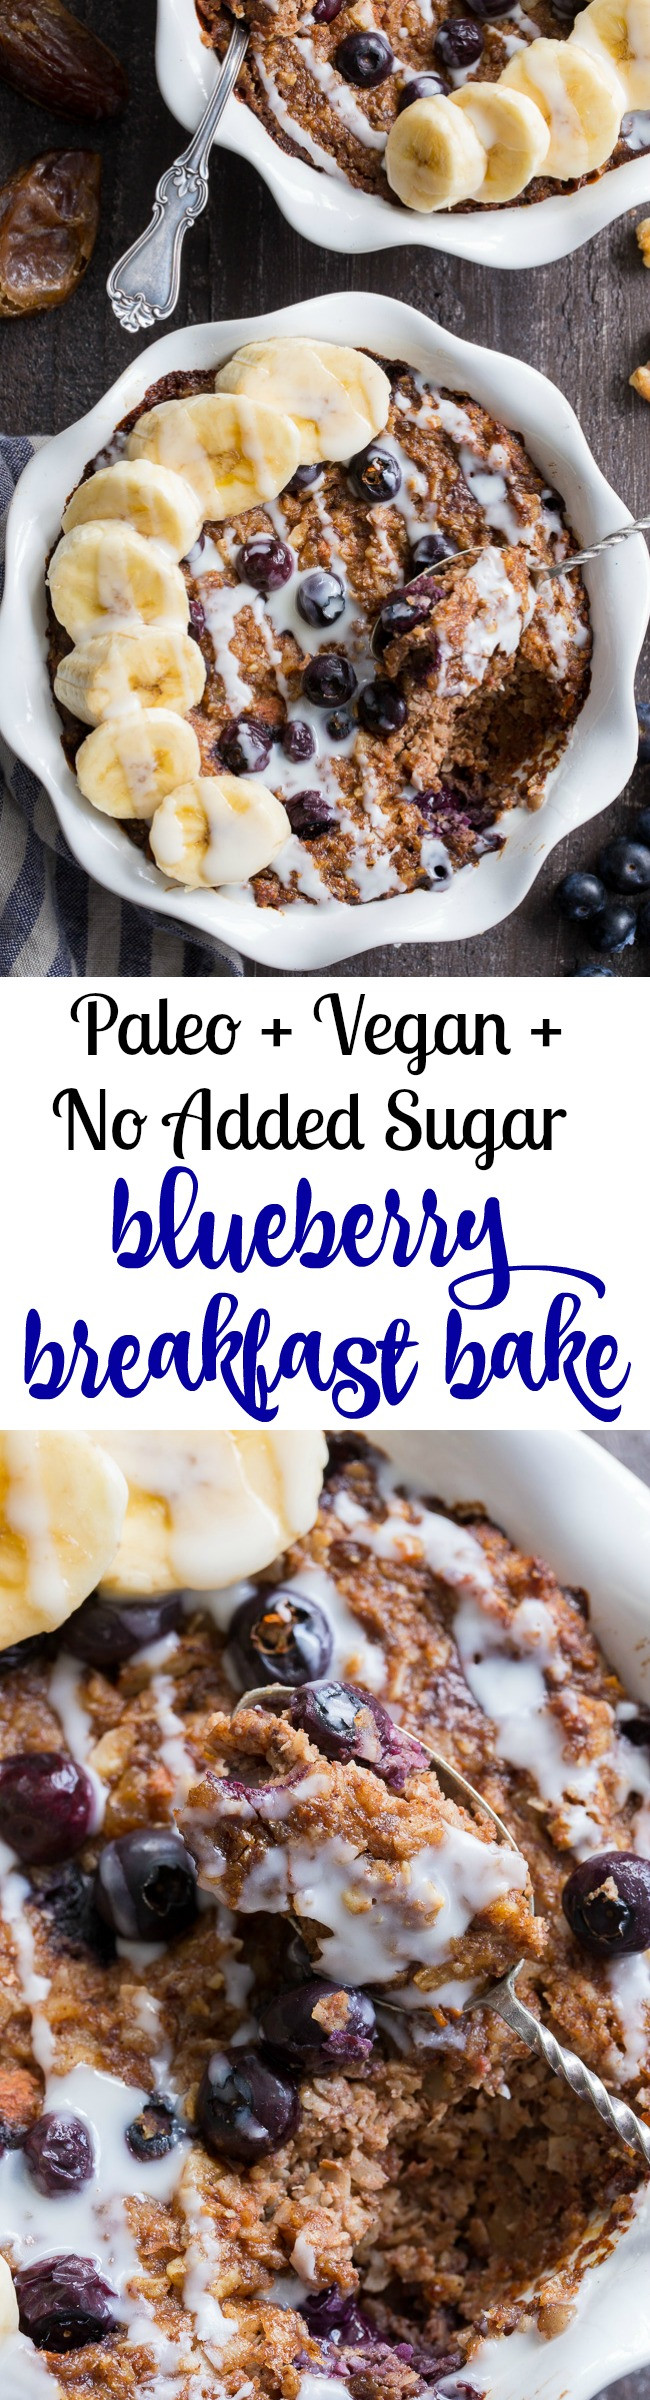 Paleo Vegan Breakfast
 Blueberry "Oatmeal" Breakfast Bake Paleo Vegan No Sugar